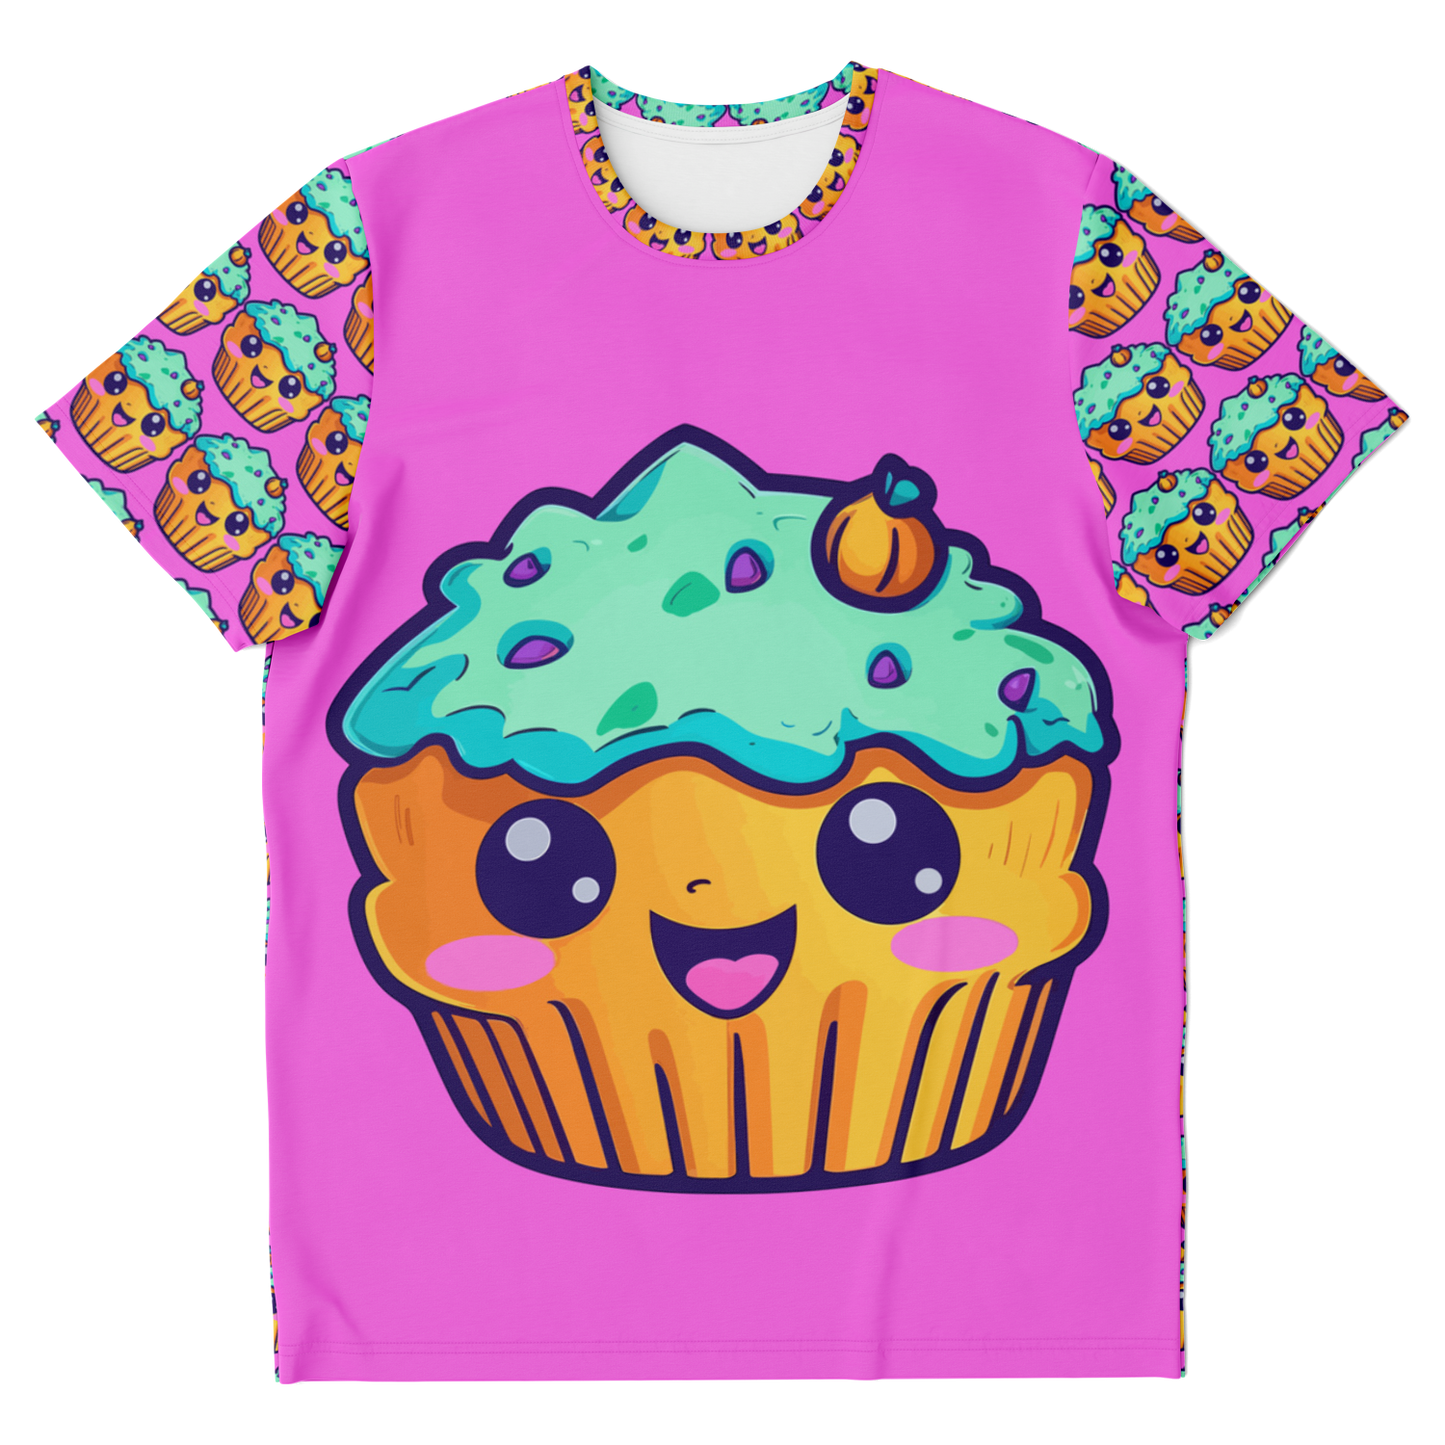 <alt.Pretty Pink Muffin T-Shirt - Taufaa>